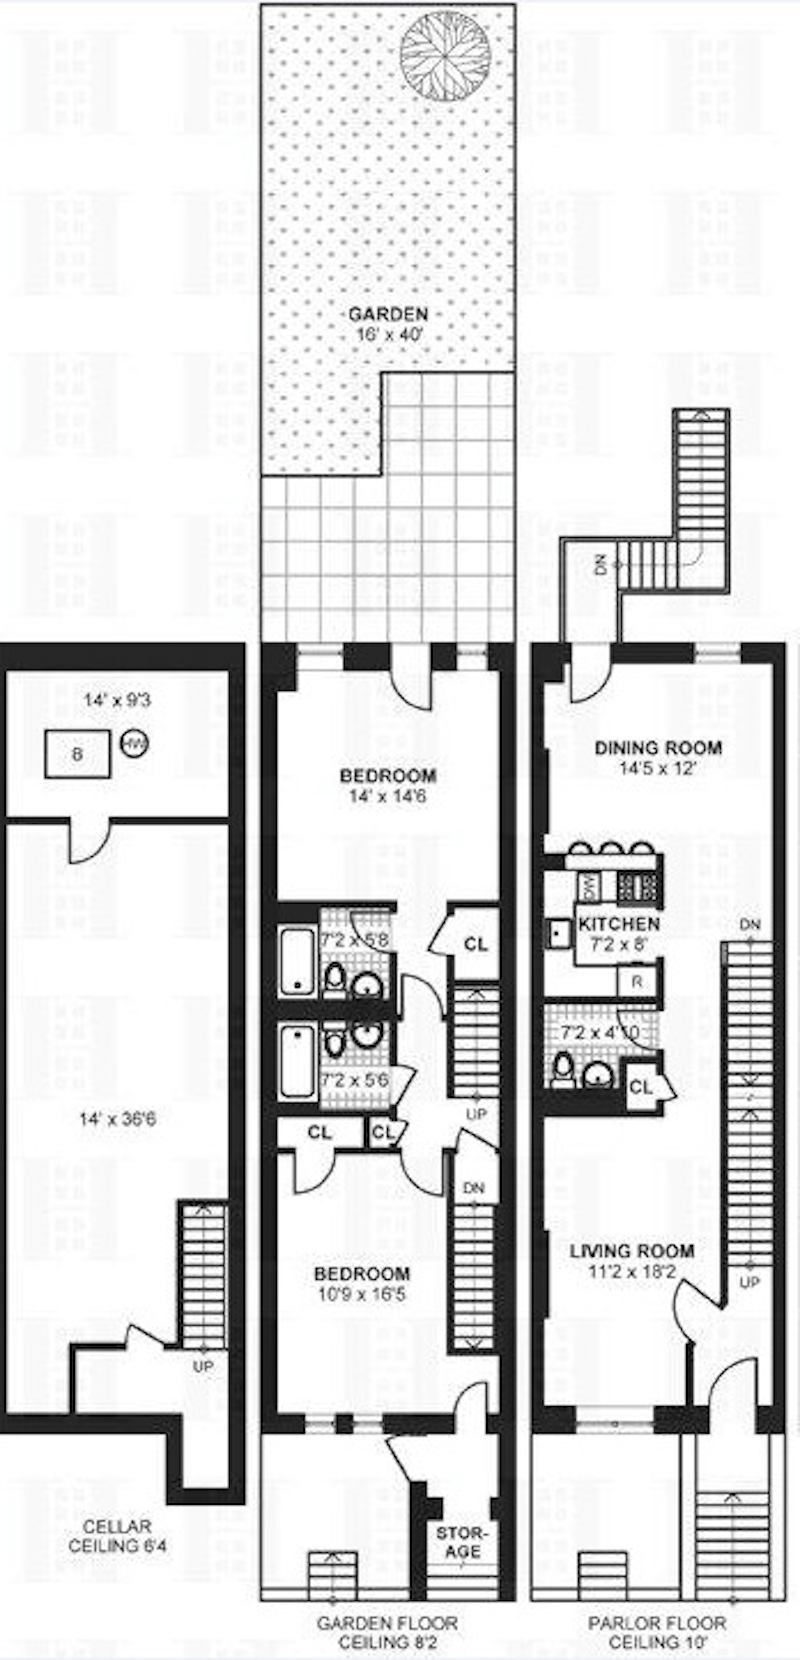 Floorplan for 164 West, 133rd Street